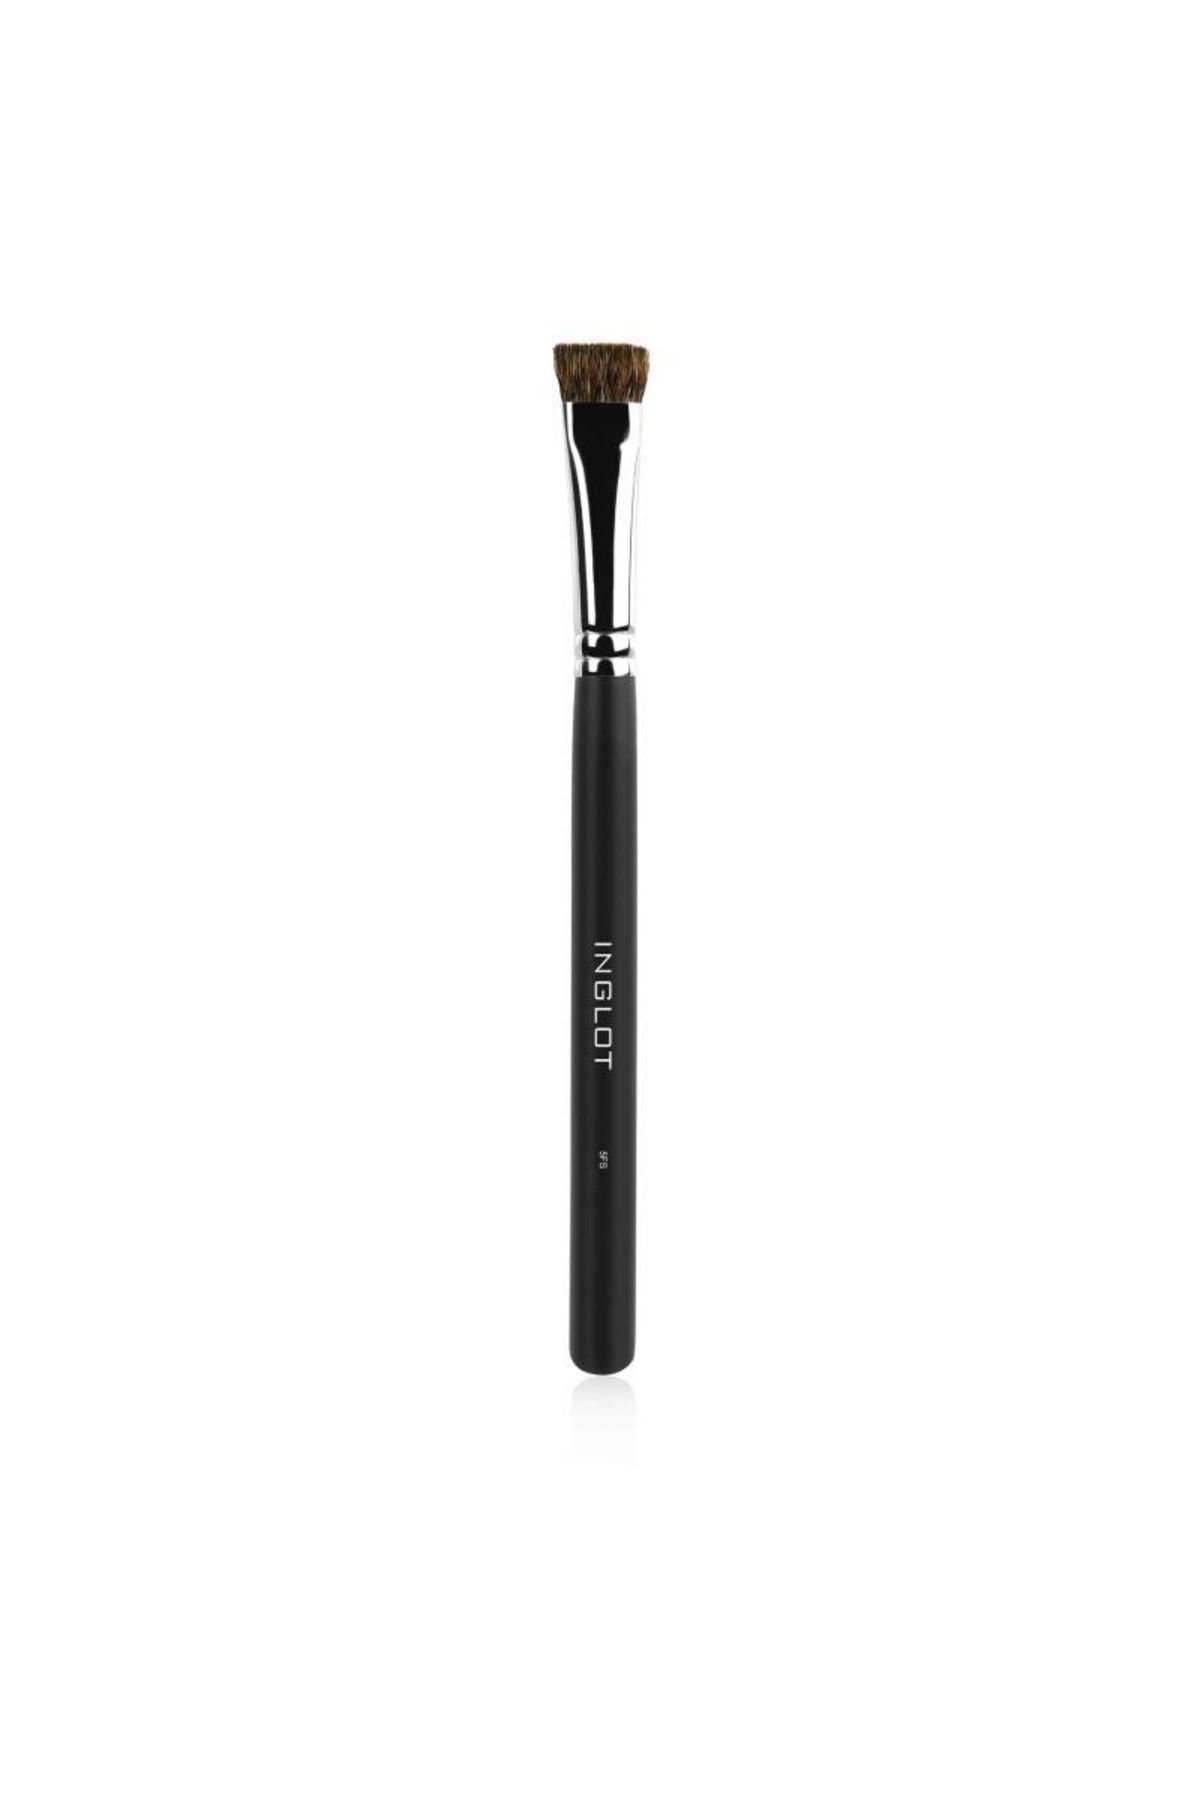 Inglot Makeup Brush 5fs